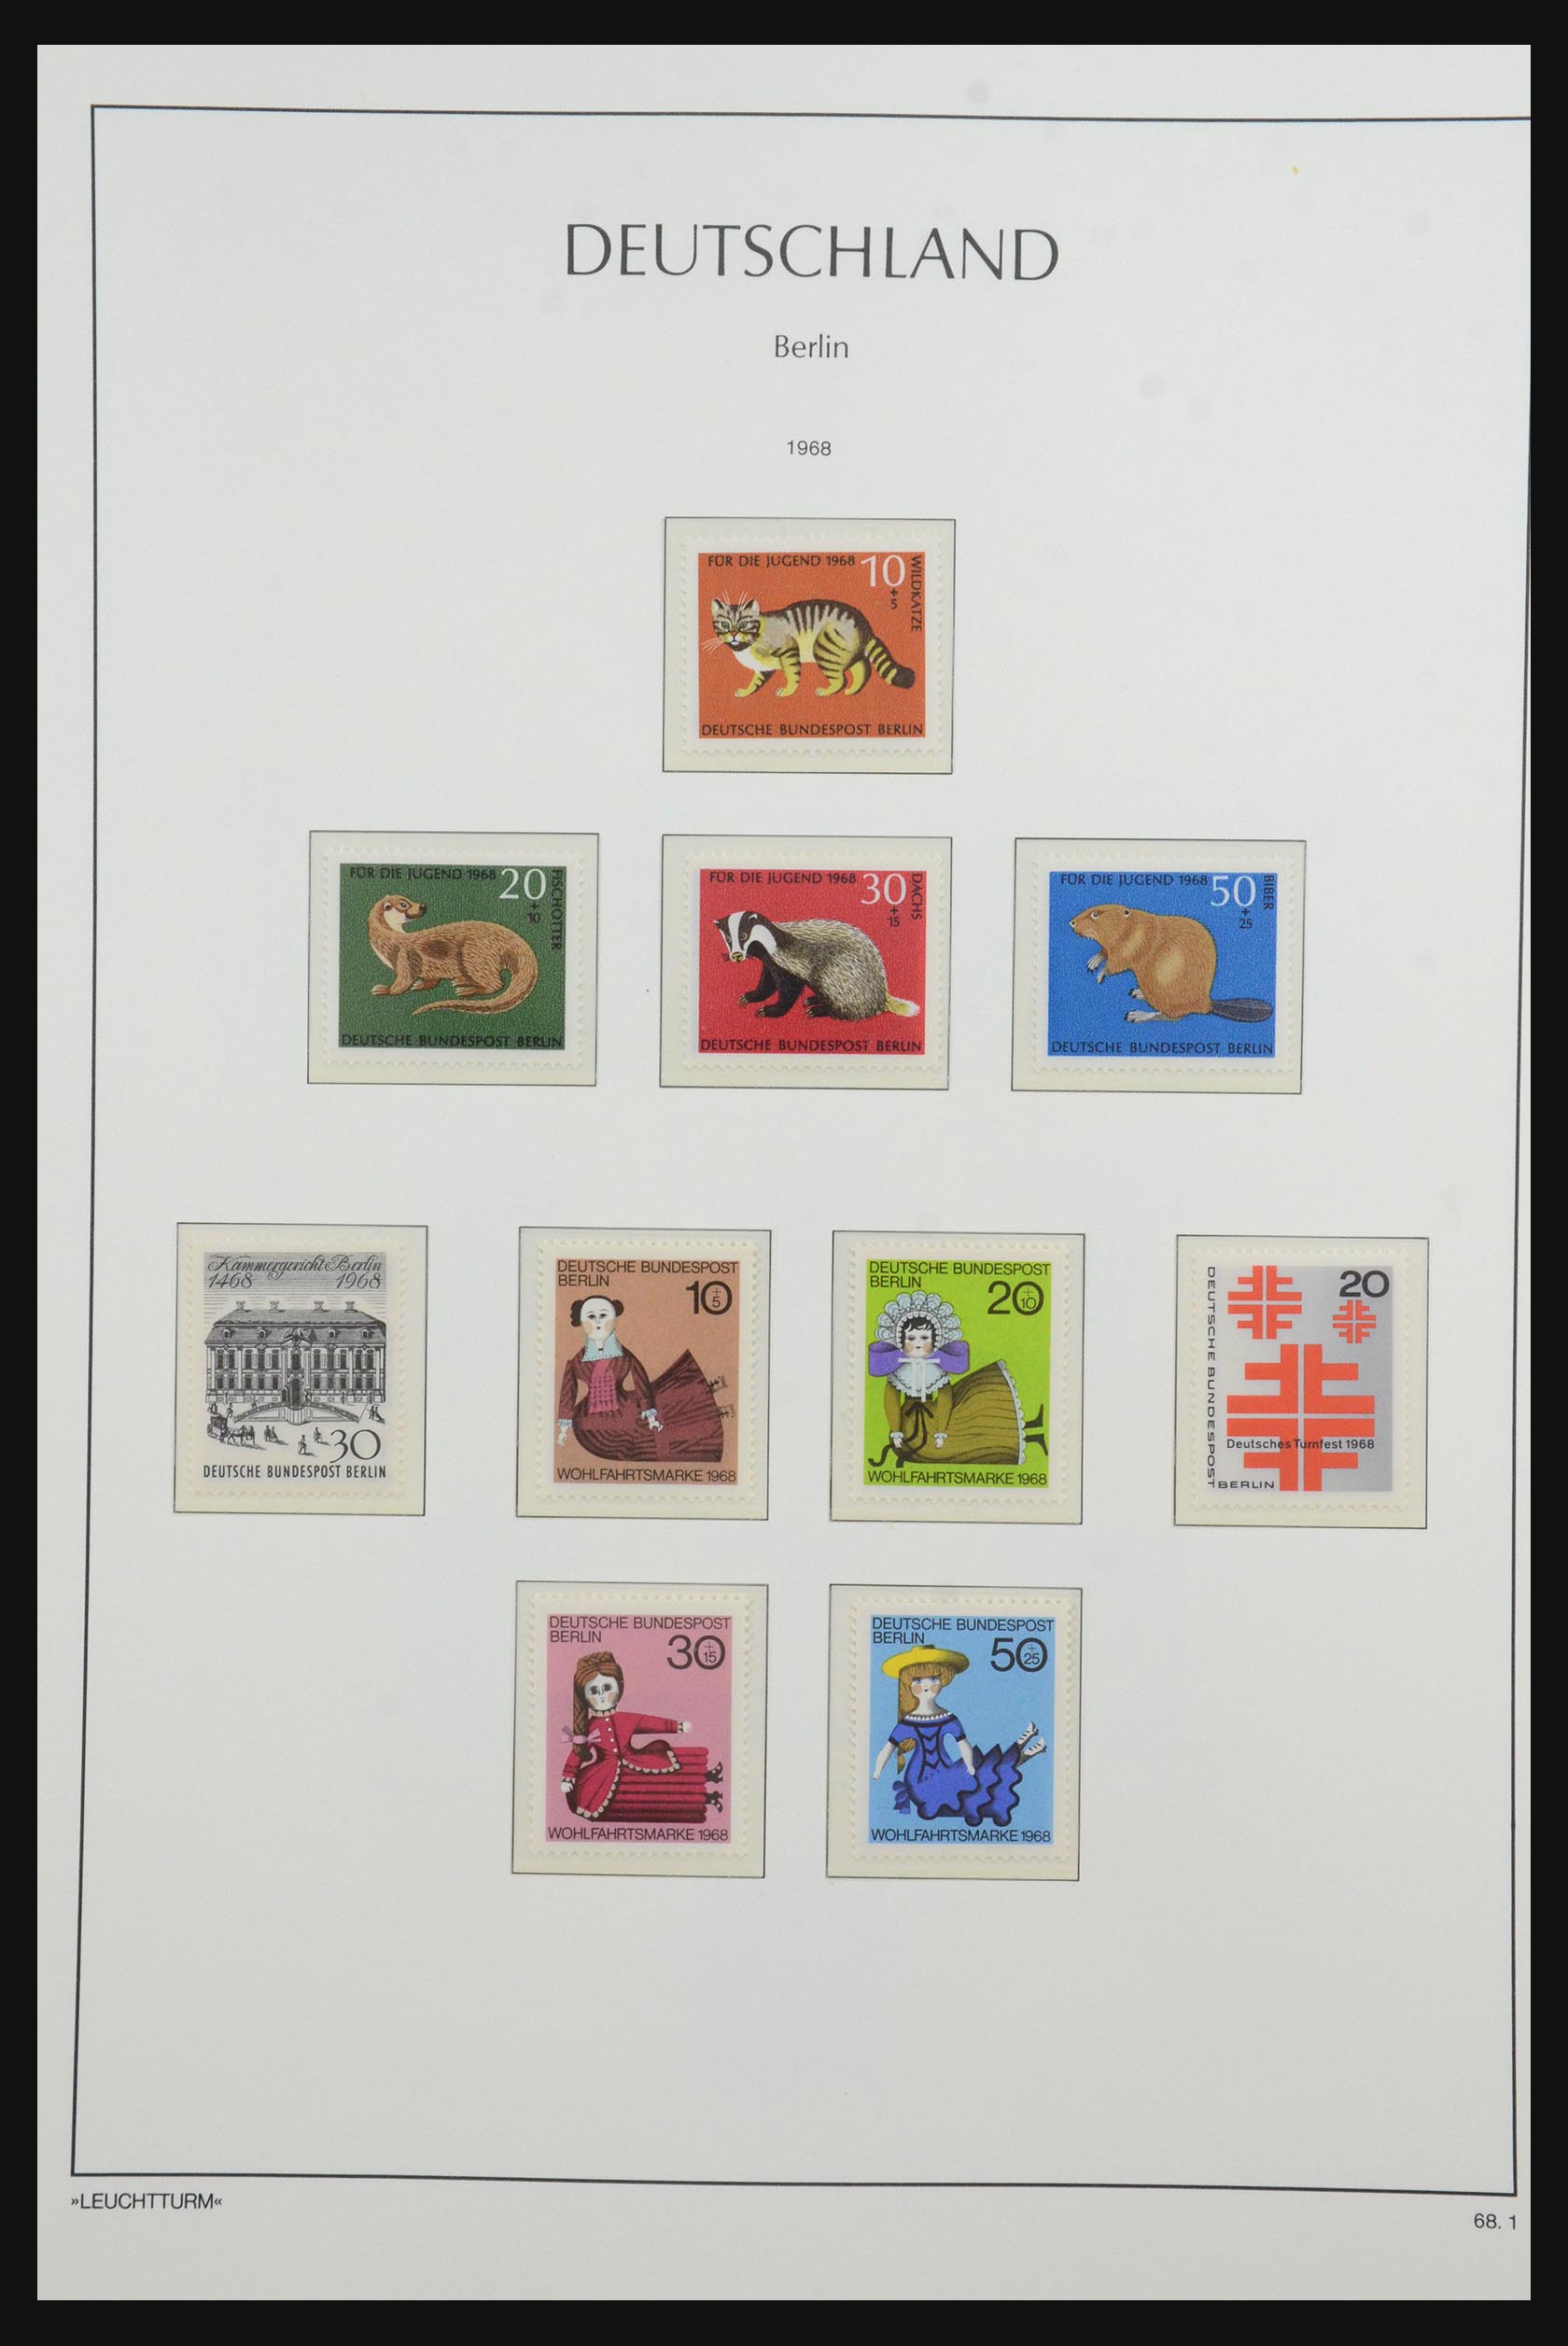 31601 027 - 31601 Bundespost, Berlin and Saar 1948-2008.